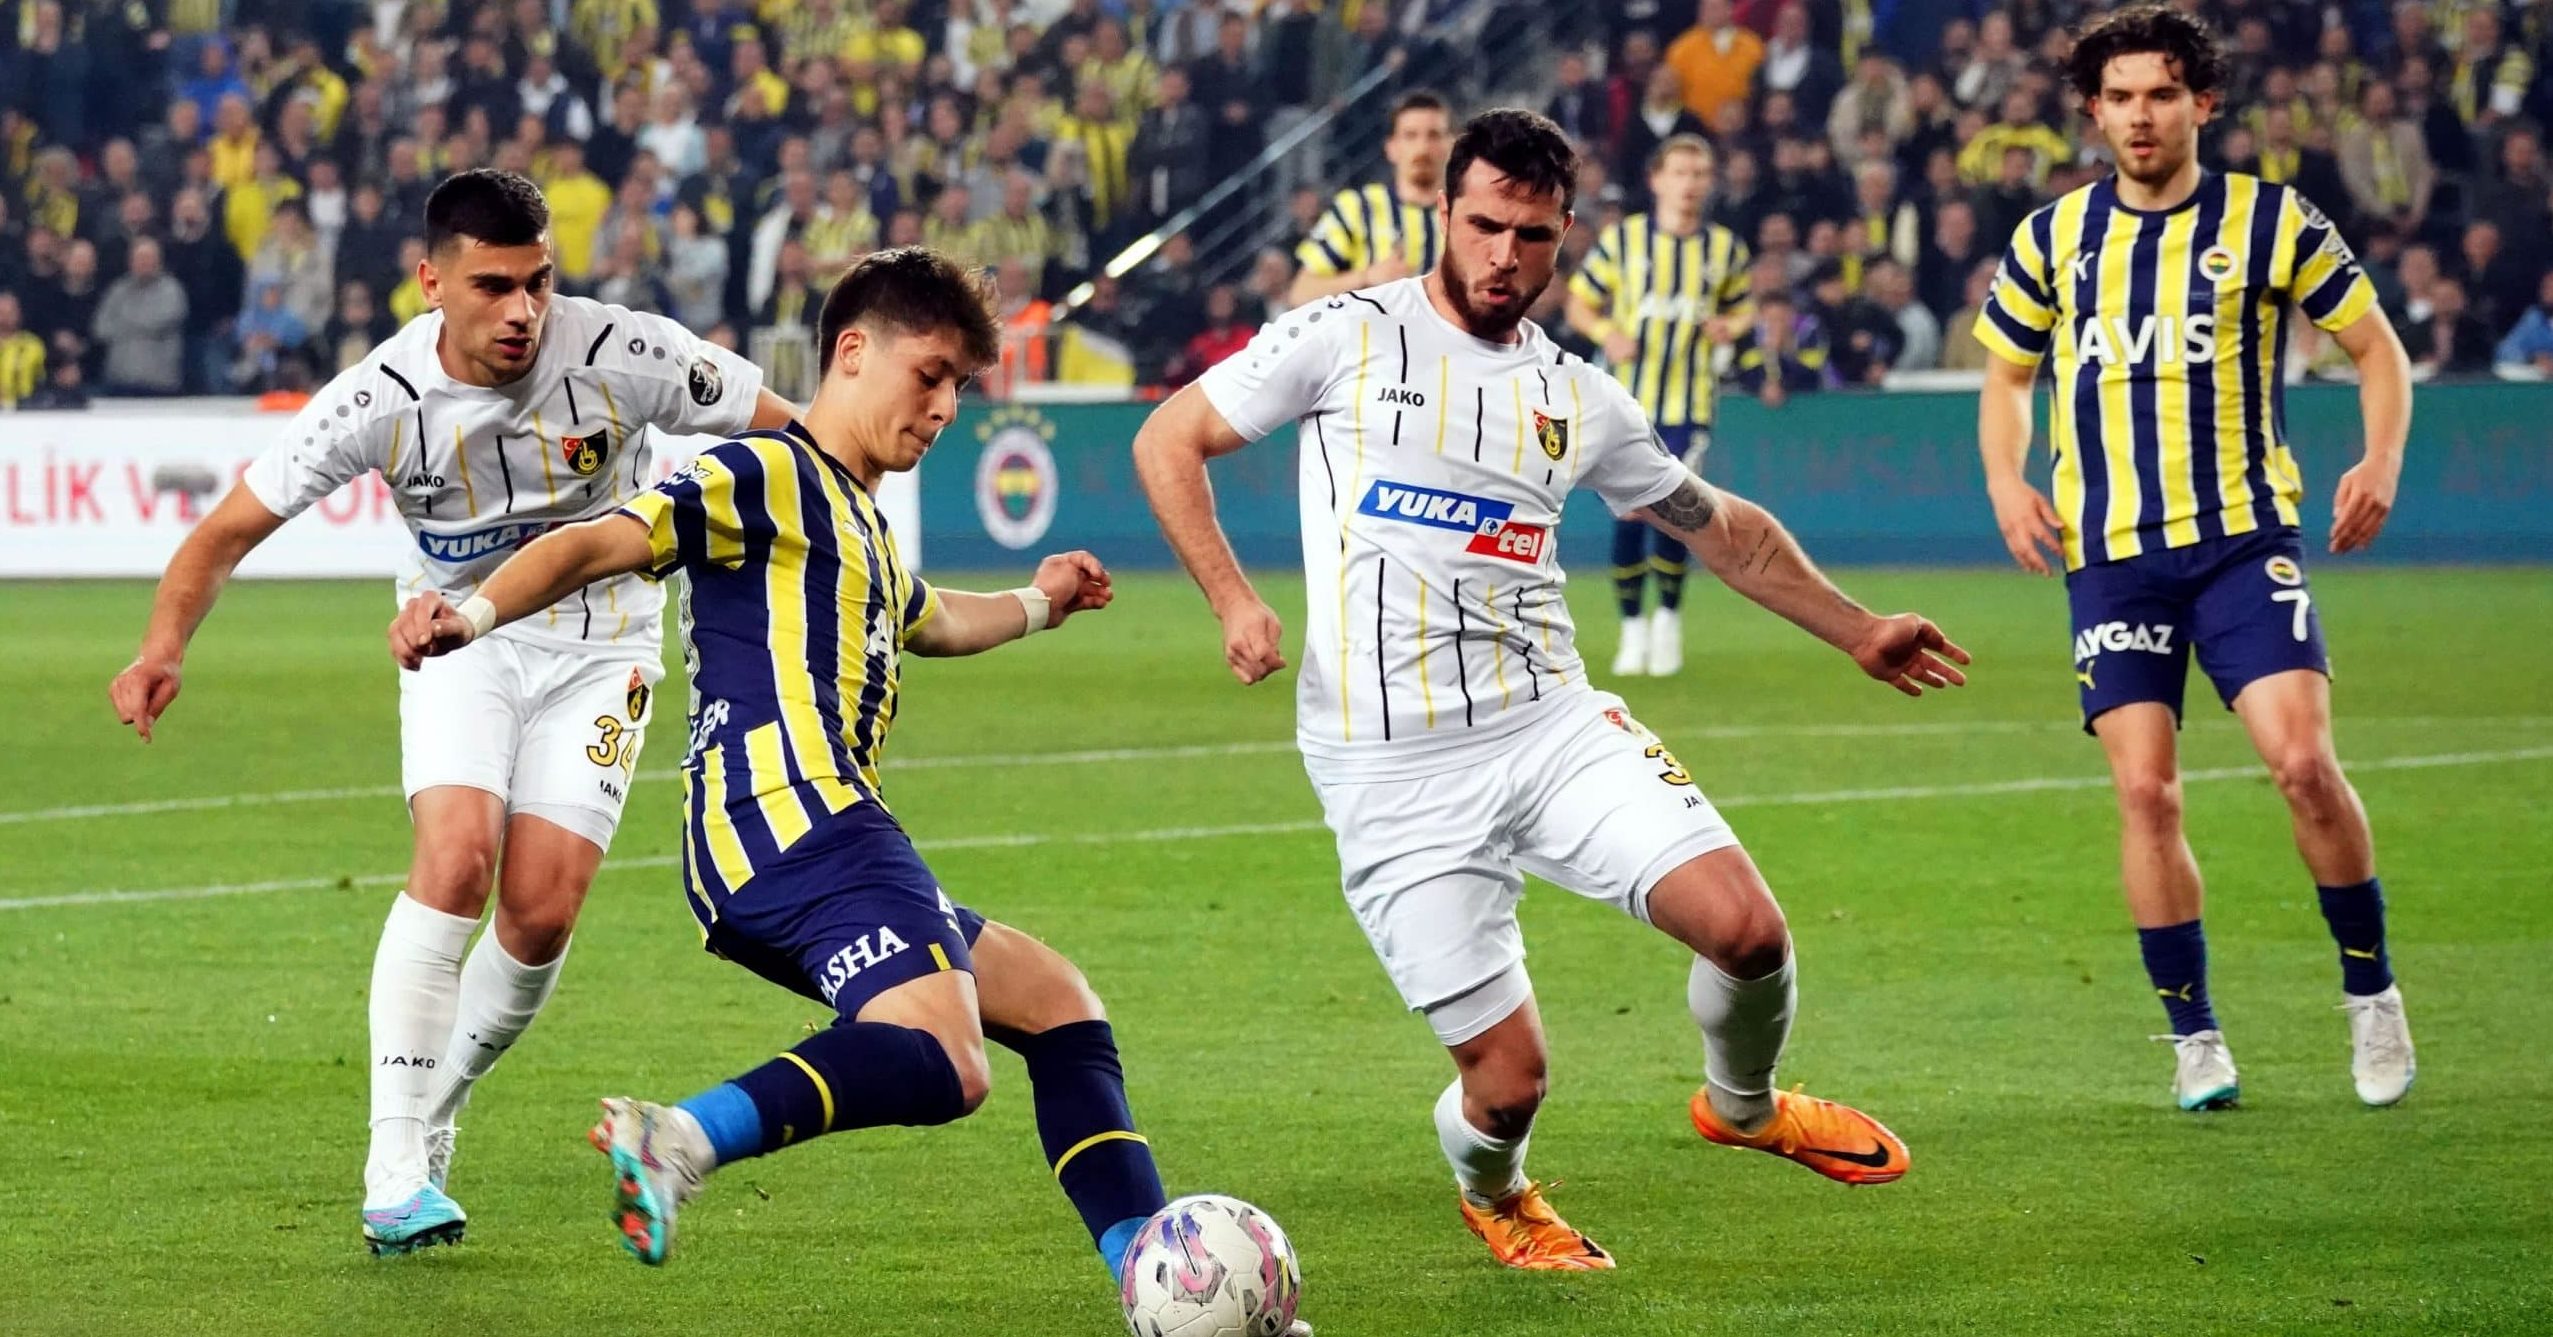 Fenerbahçe vs Zenit: A Clash of Football Titans